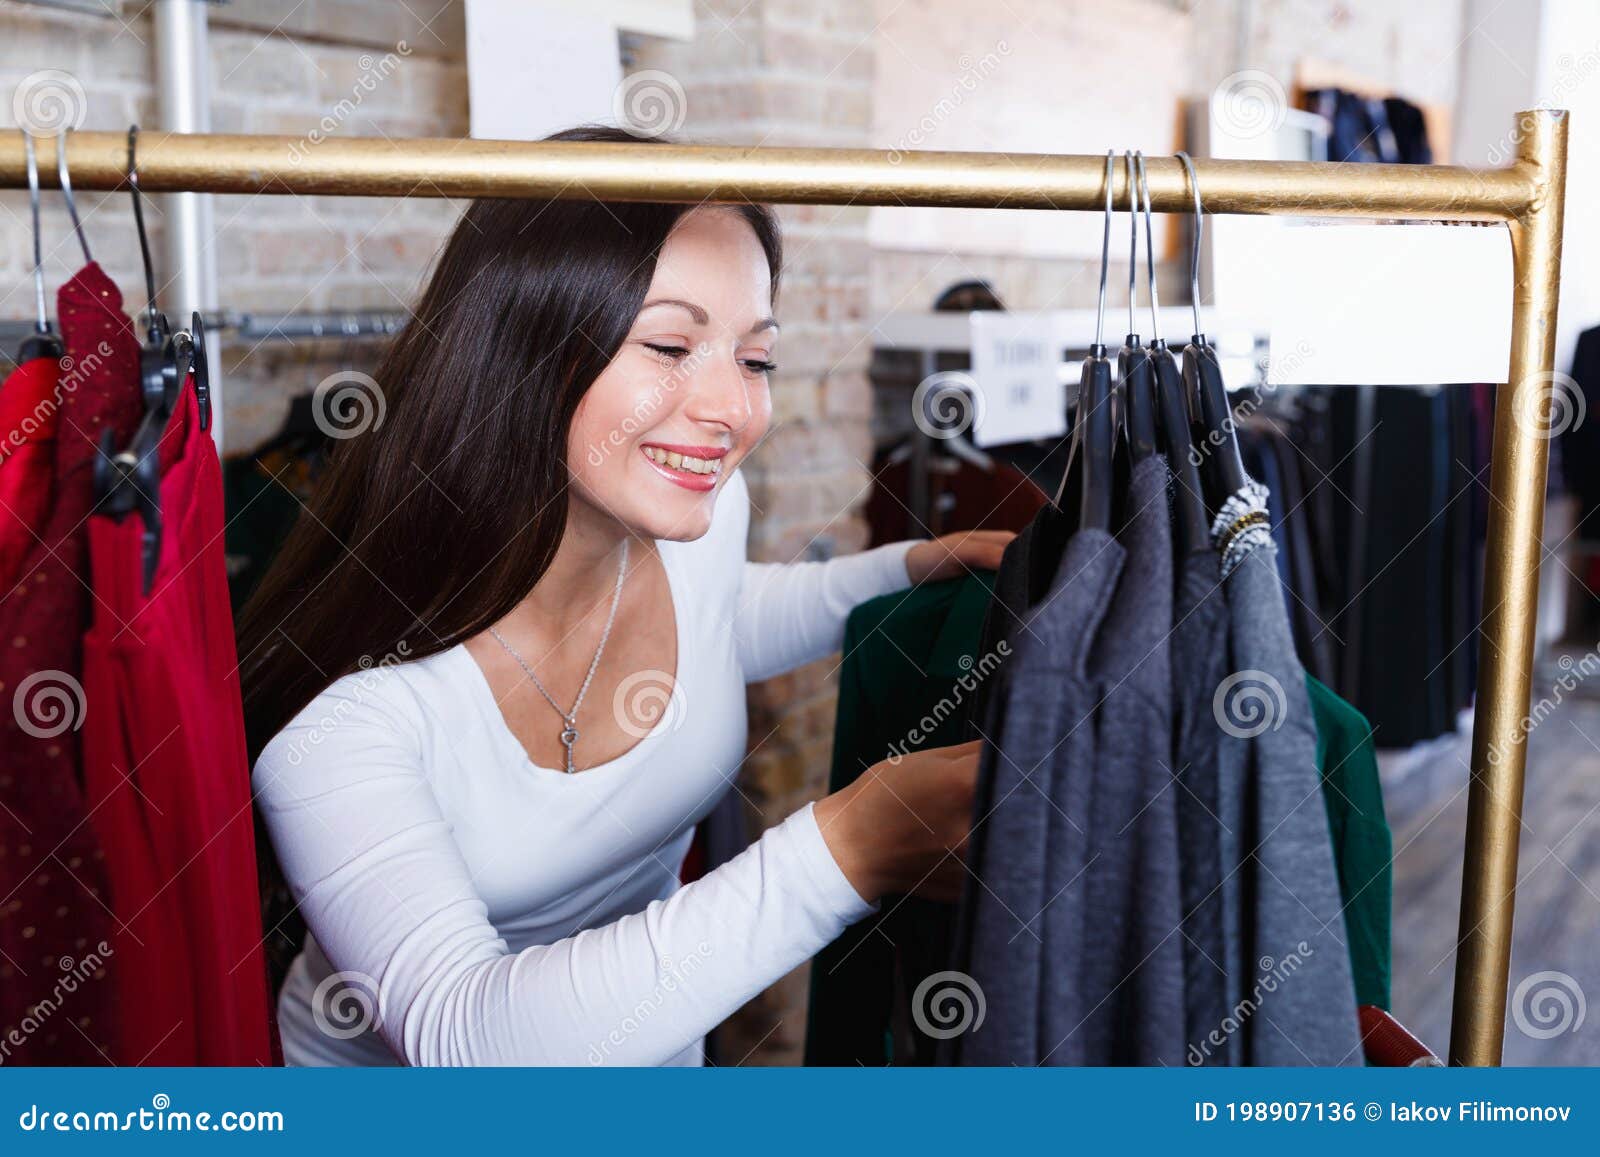 Positive Cute Girl Customer Buying Fashion Shirt Stock Photo - Image of ...